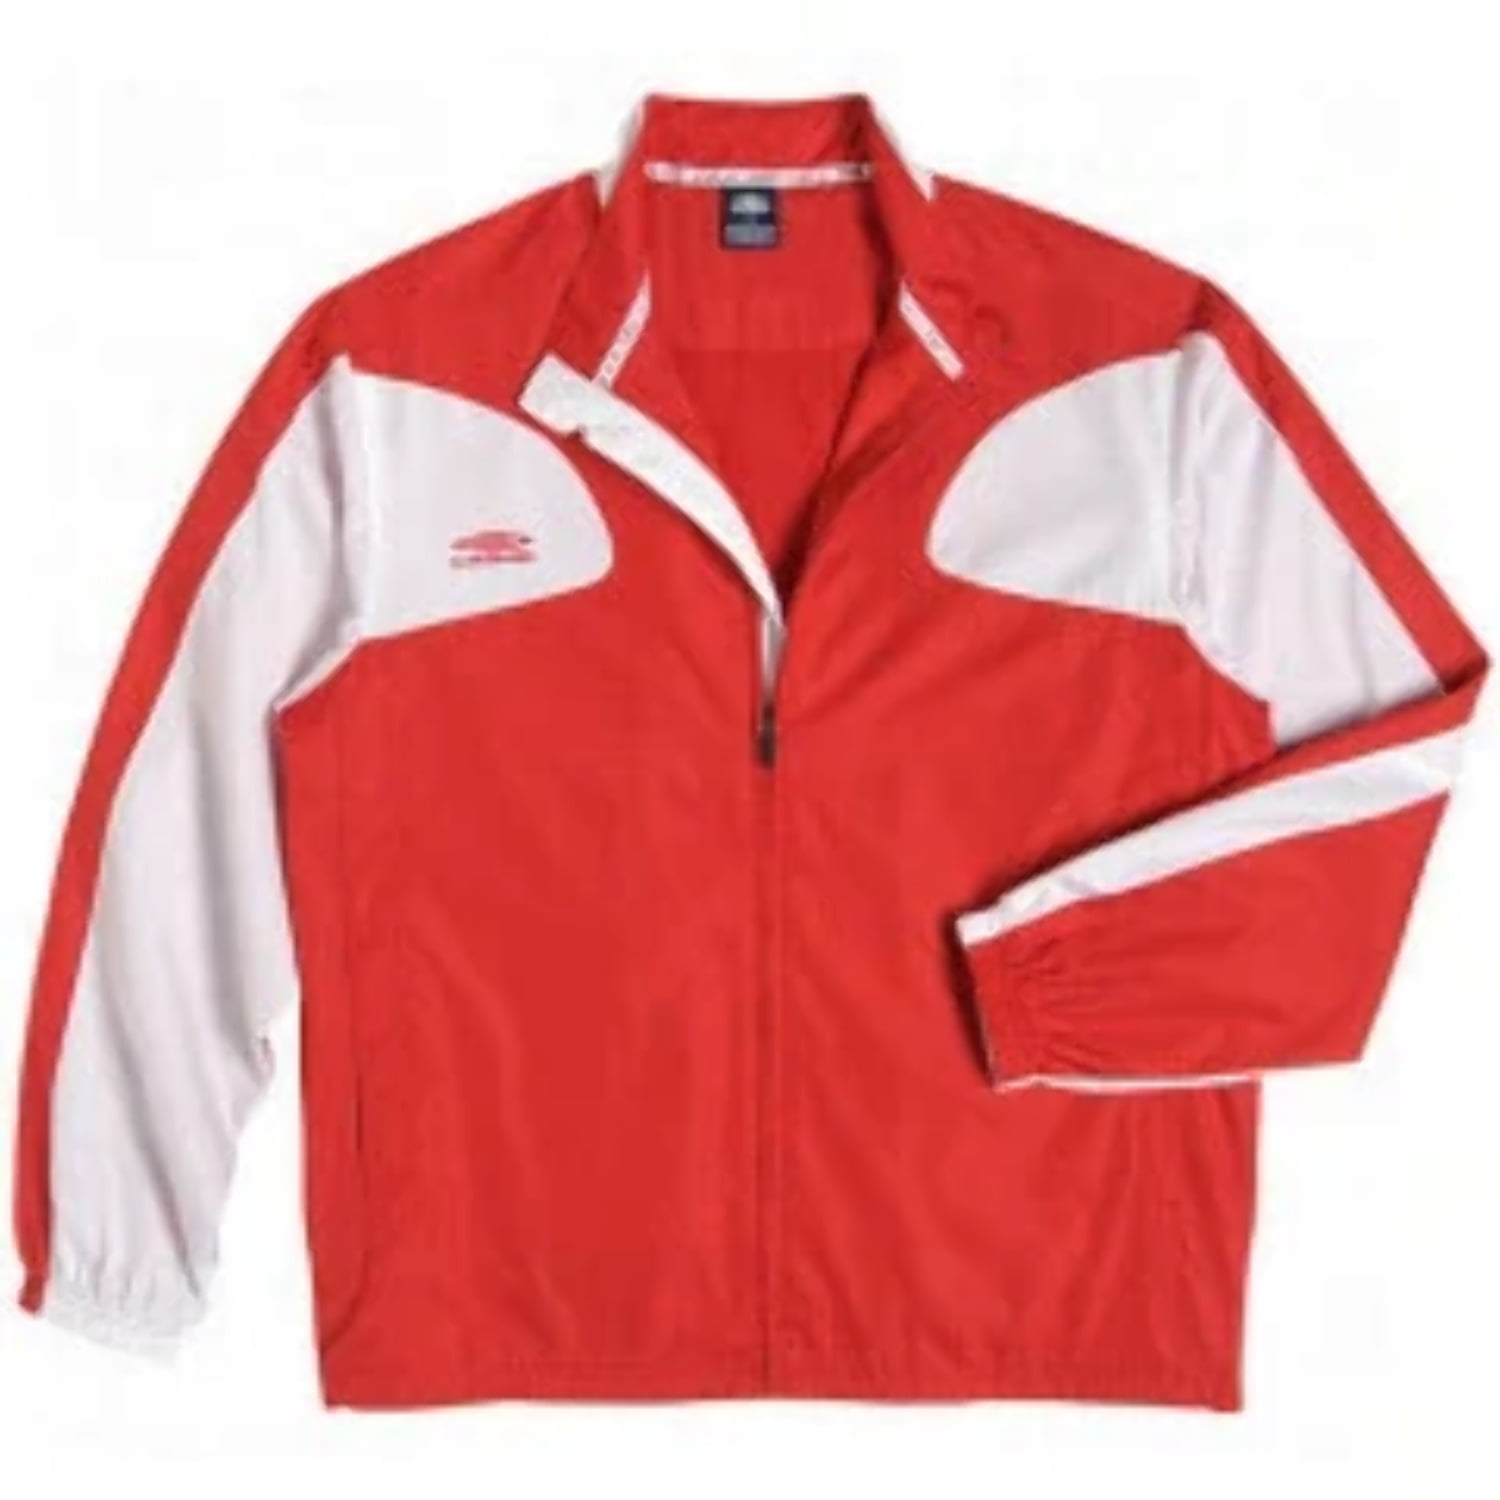 Umbro HC Water Resistant Warm Up Full Zip Training Top Jacket Brand New 